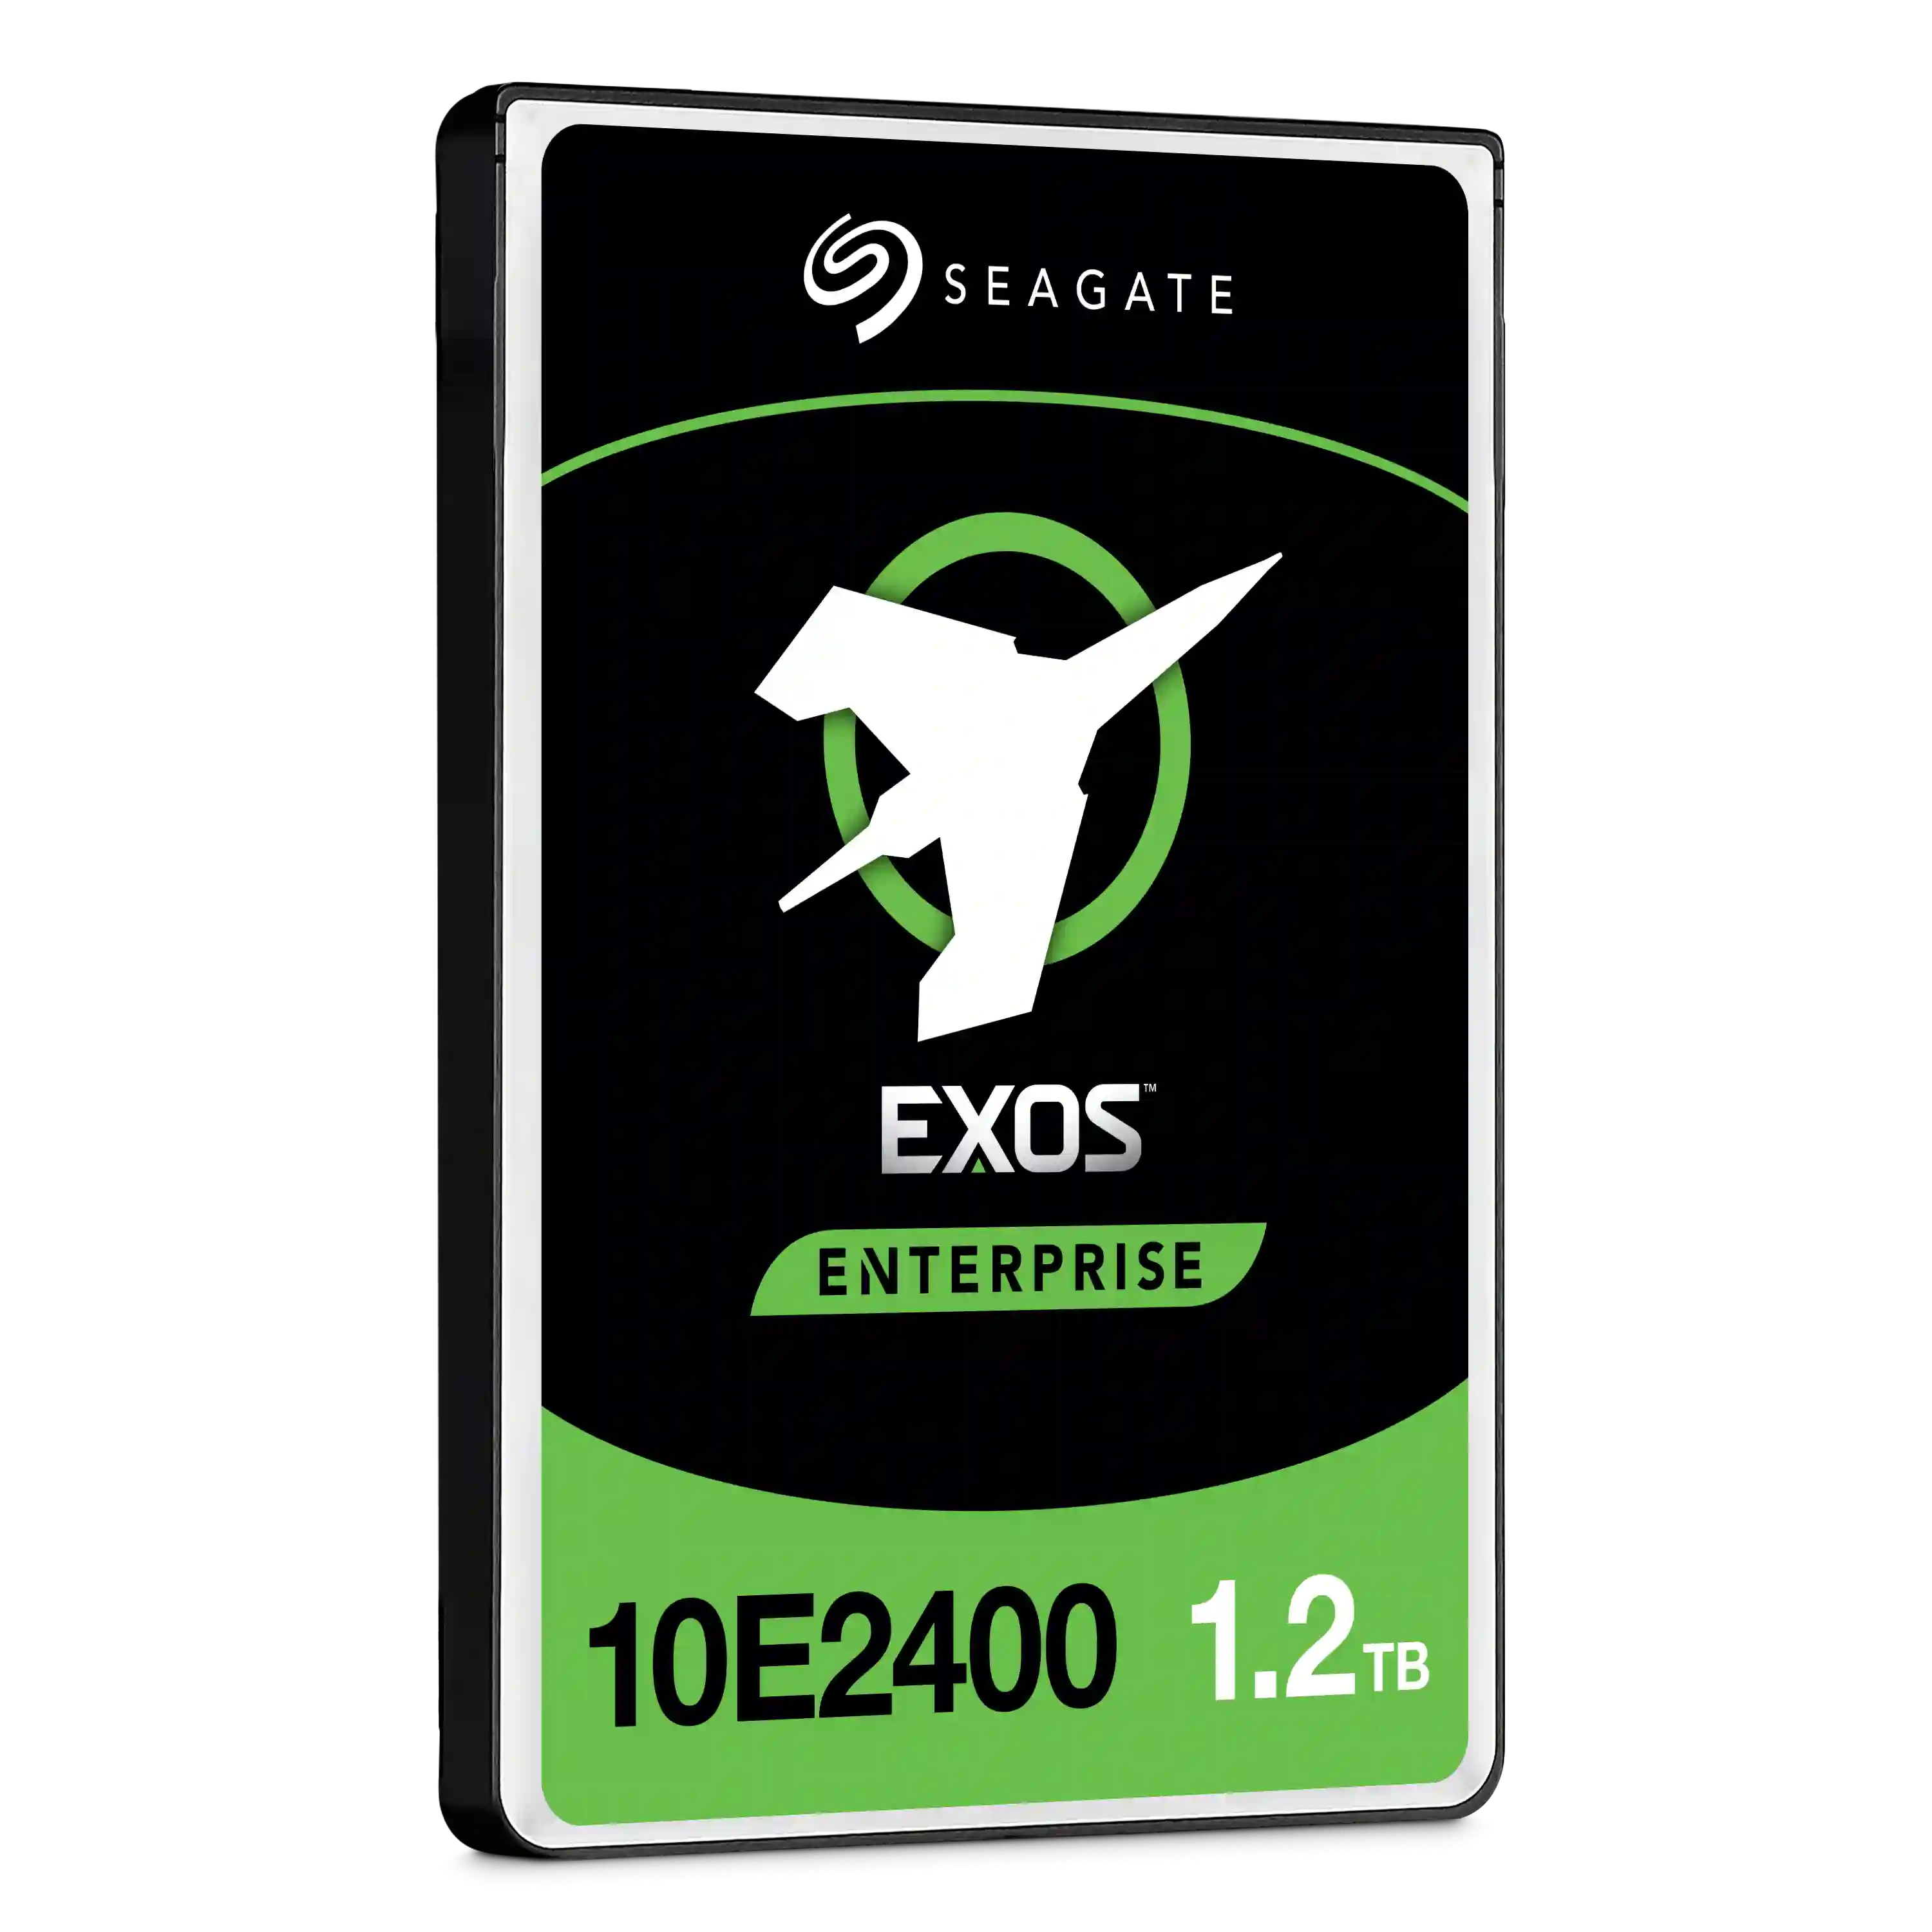 Внутренний HDD диск SEAGATE Enterprise Performance 1.2TB, SAS, 2.5" (ST1200MM0129)